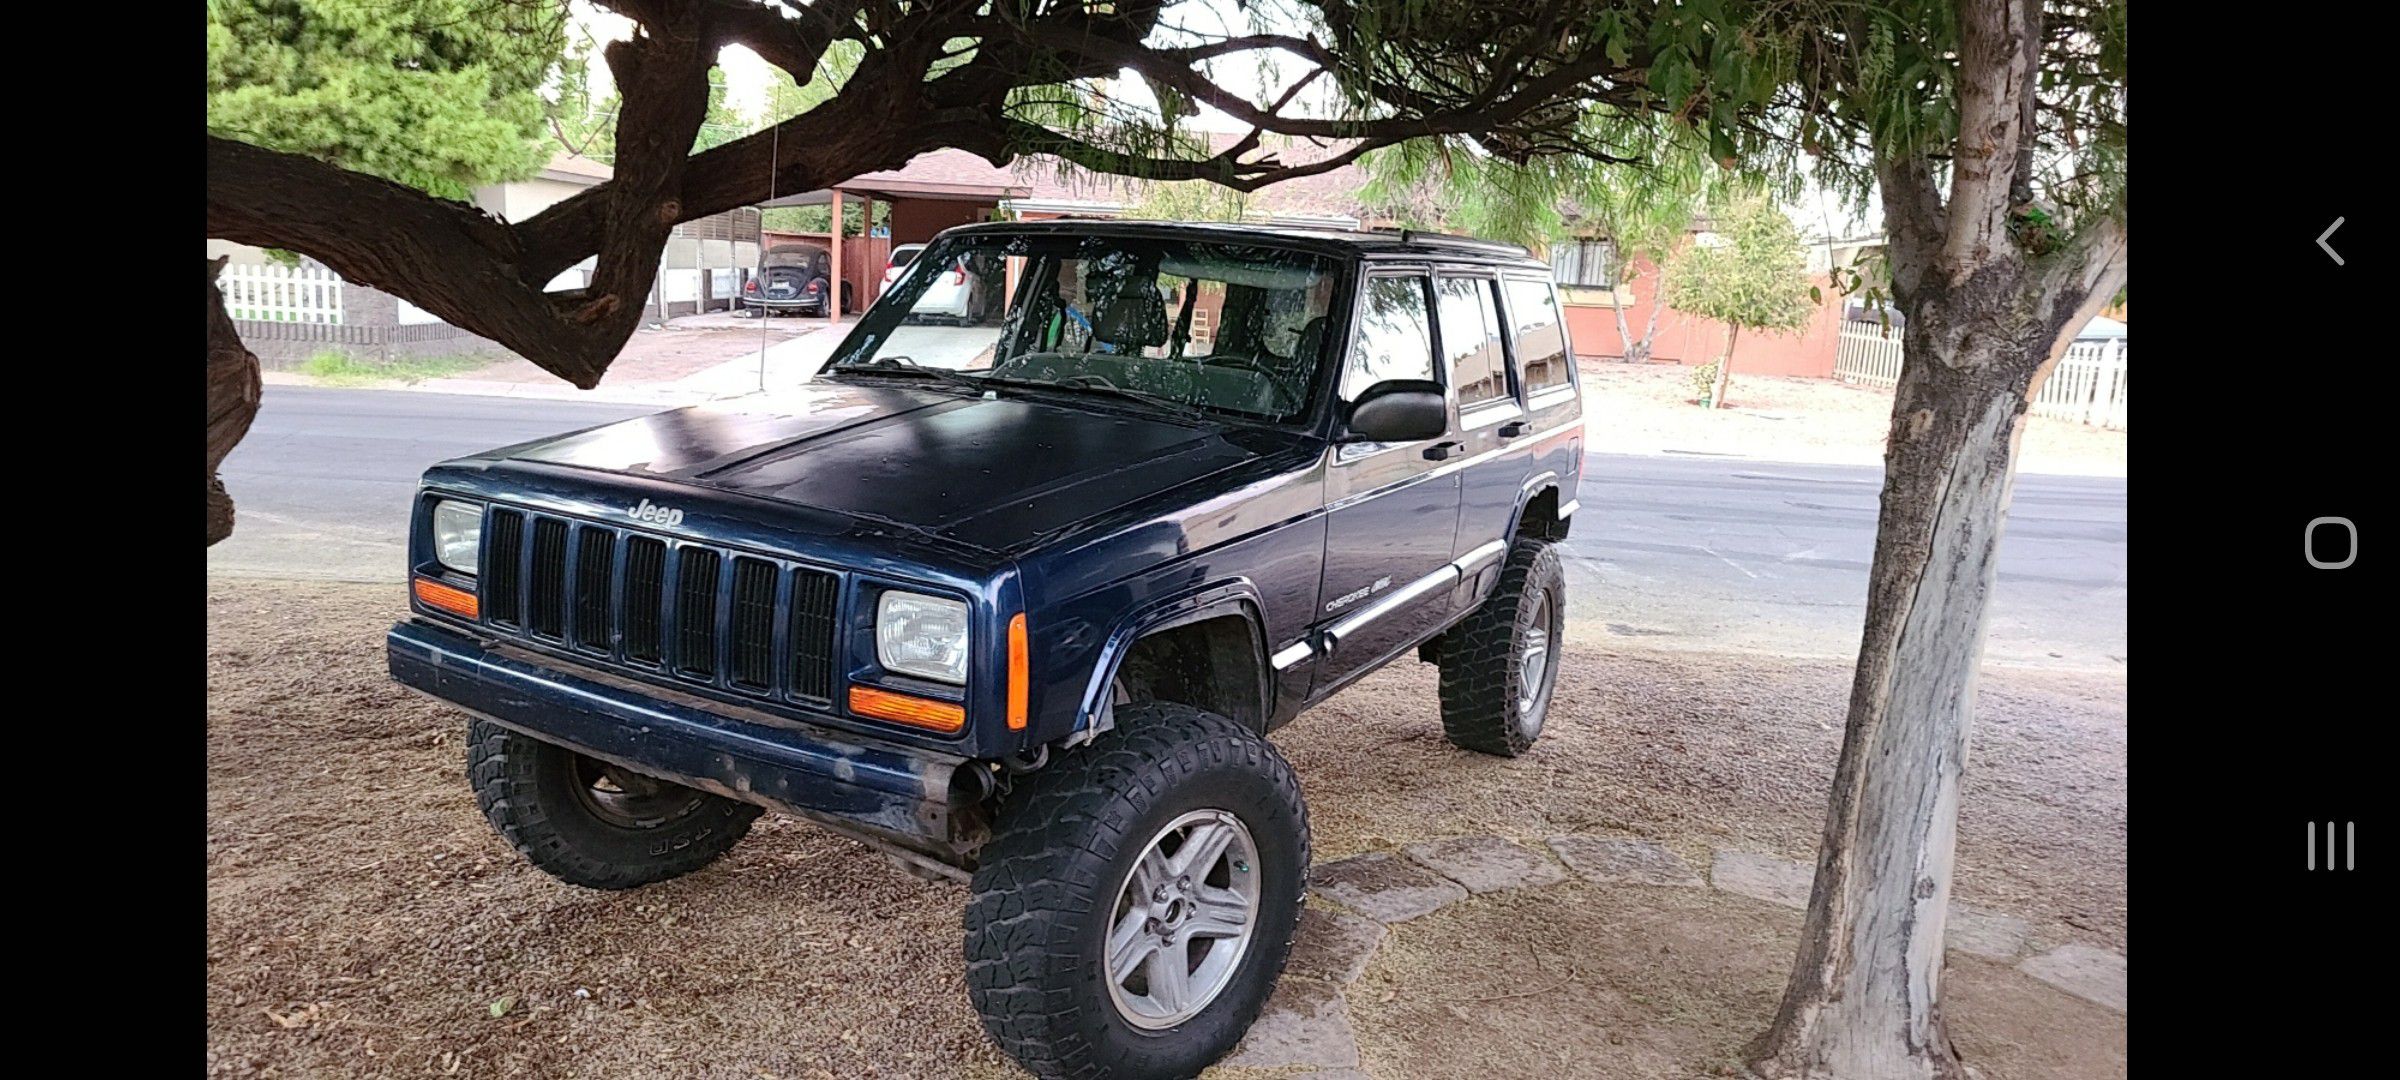 2000 jeep cherokee xj